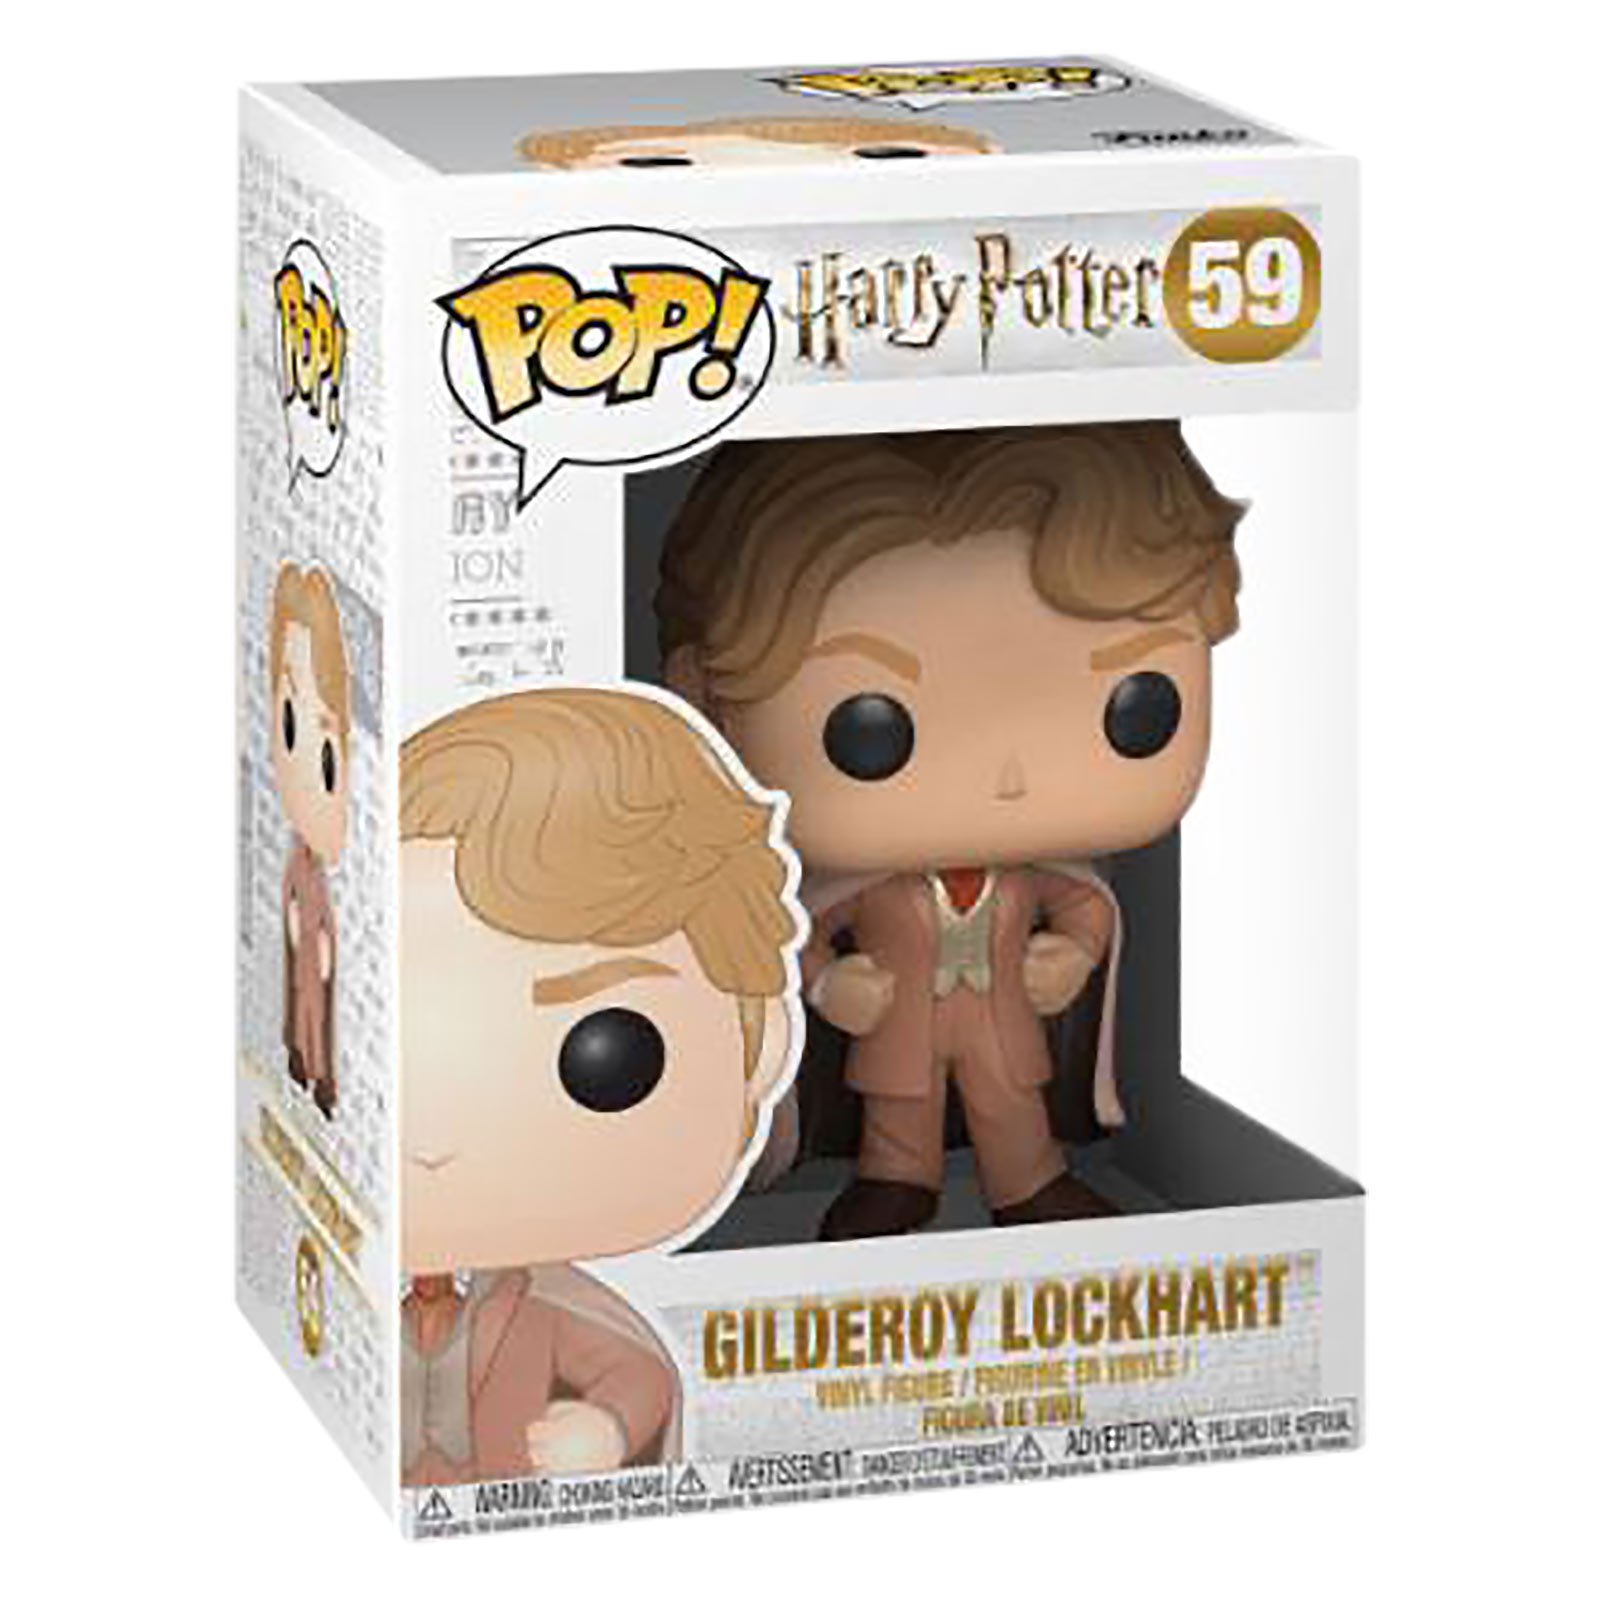 Harry Potter - Gilderoy Lockhart Funko Pop Figure